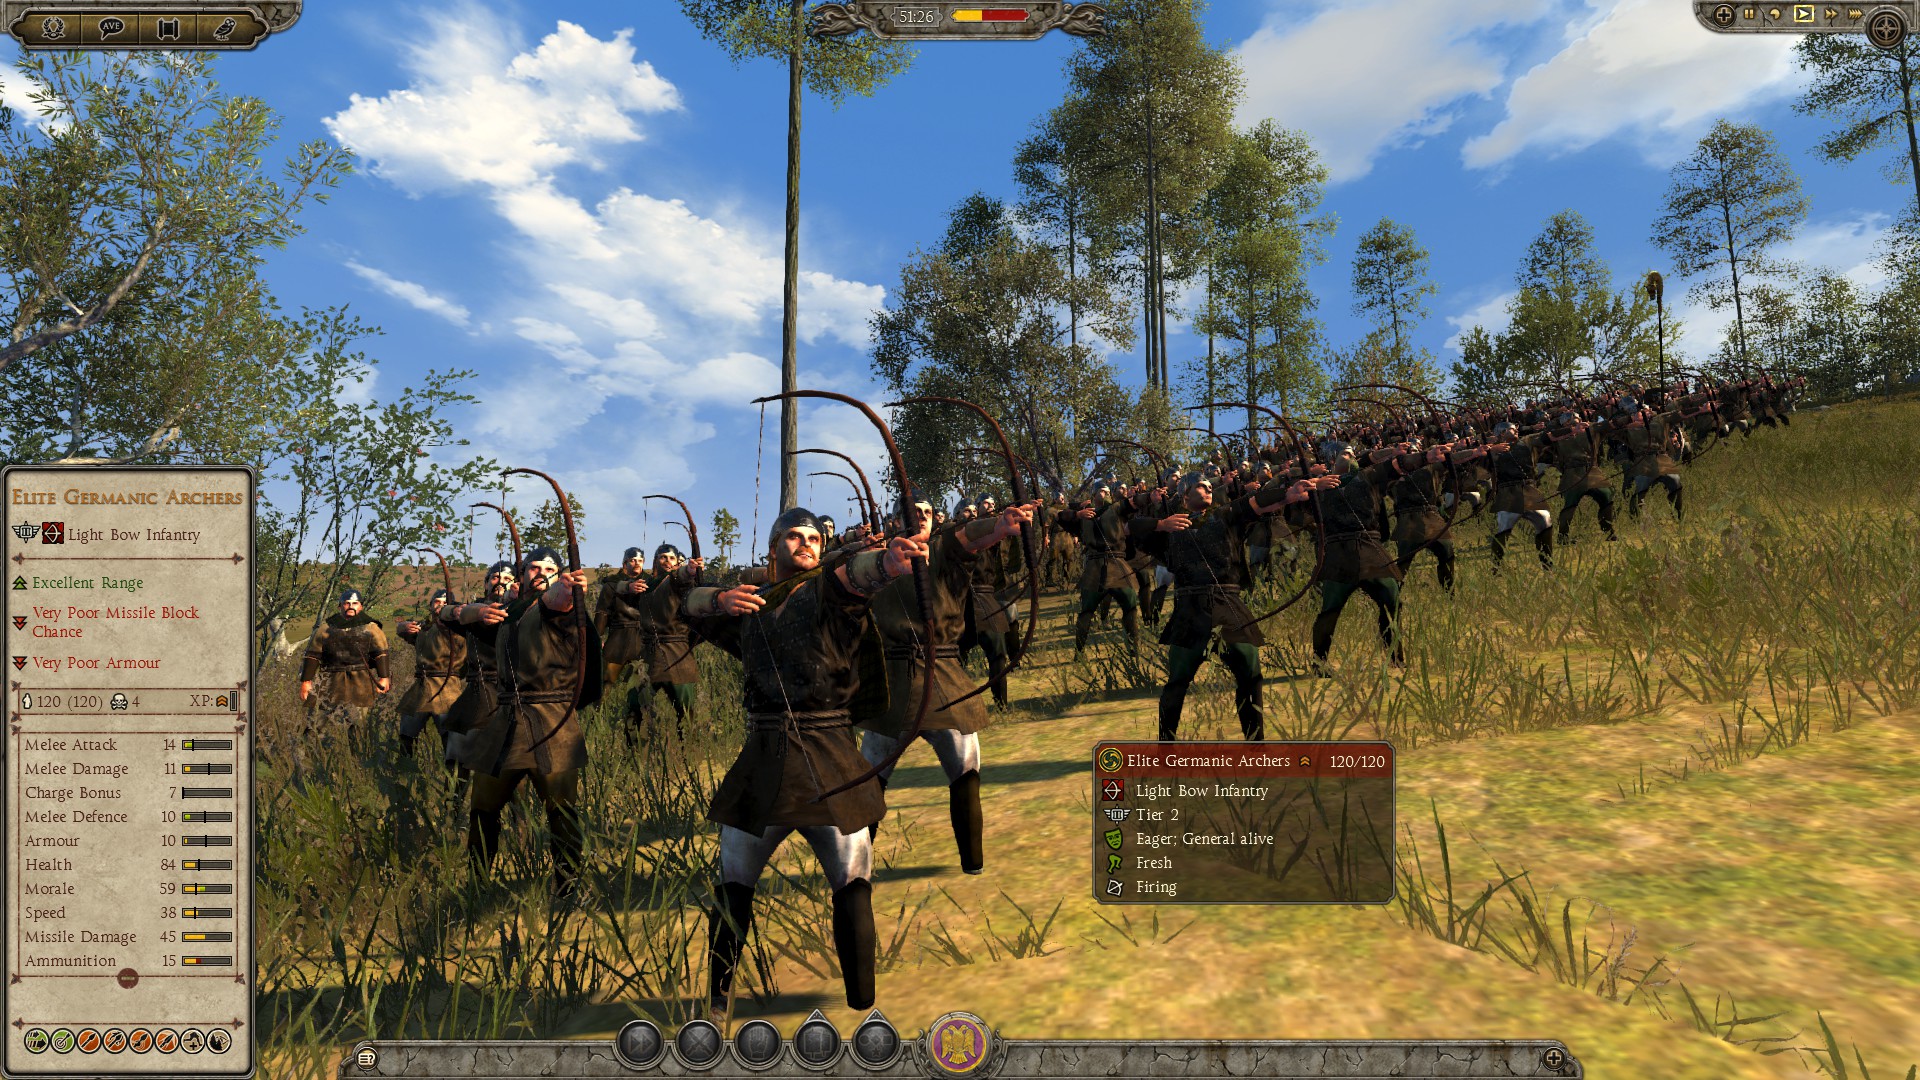 Elite Germanic Archers